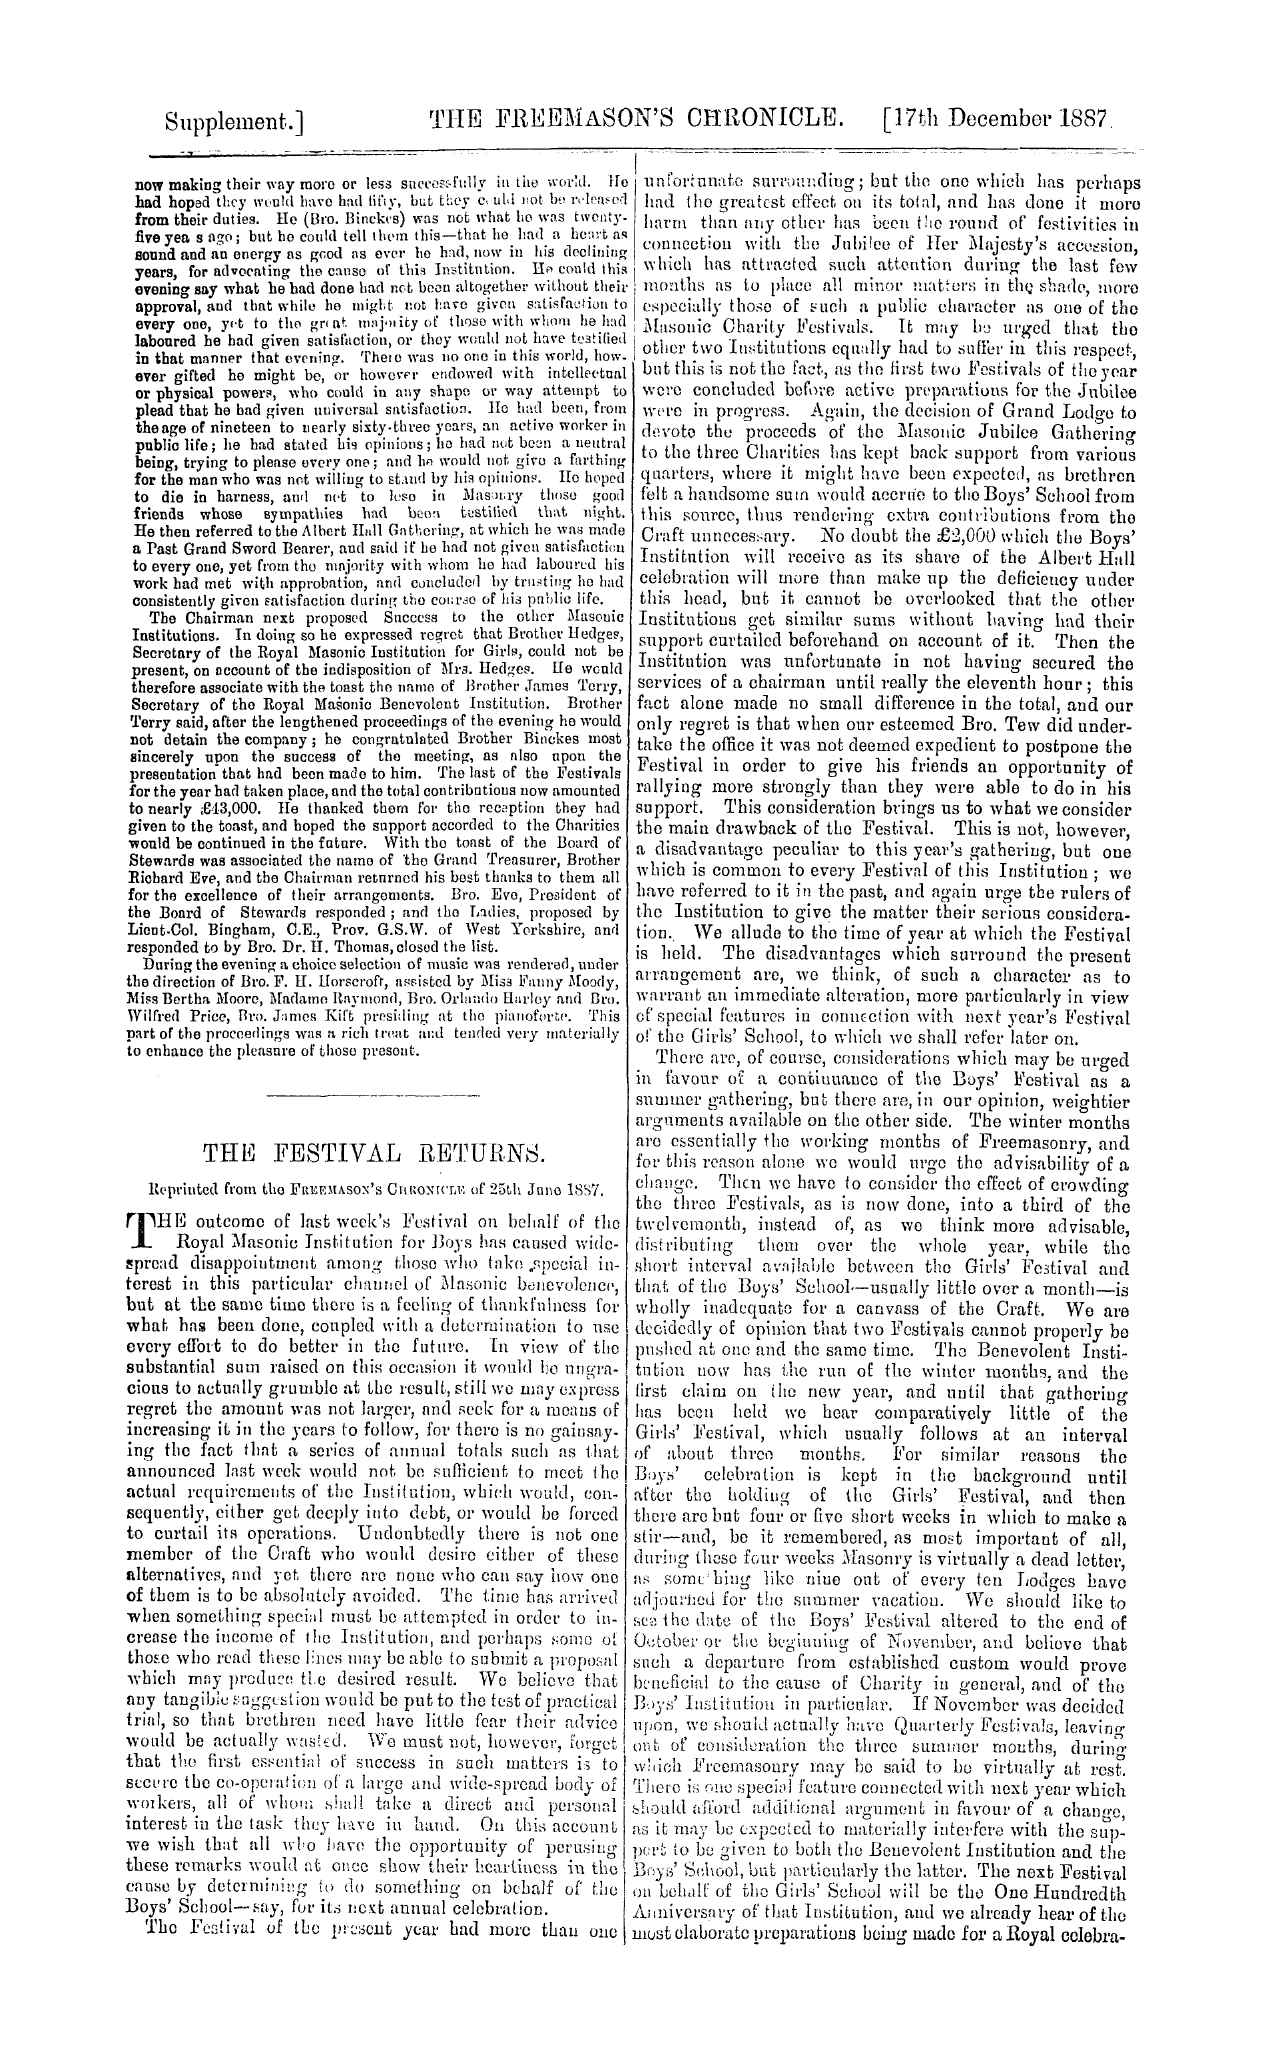 The Freemason's Chronicle: 1887-12-31 - The Festival Returns.